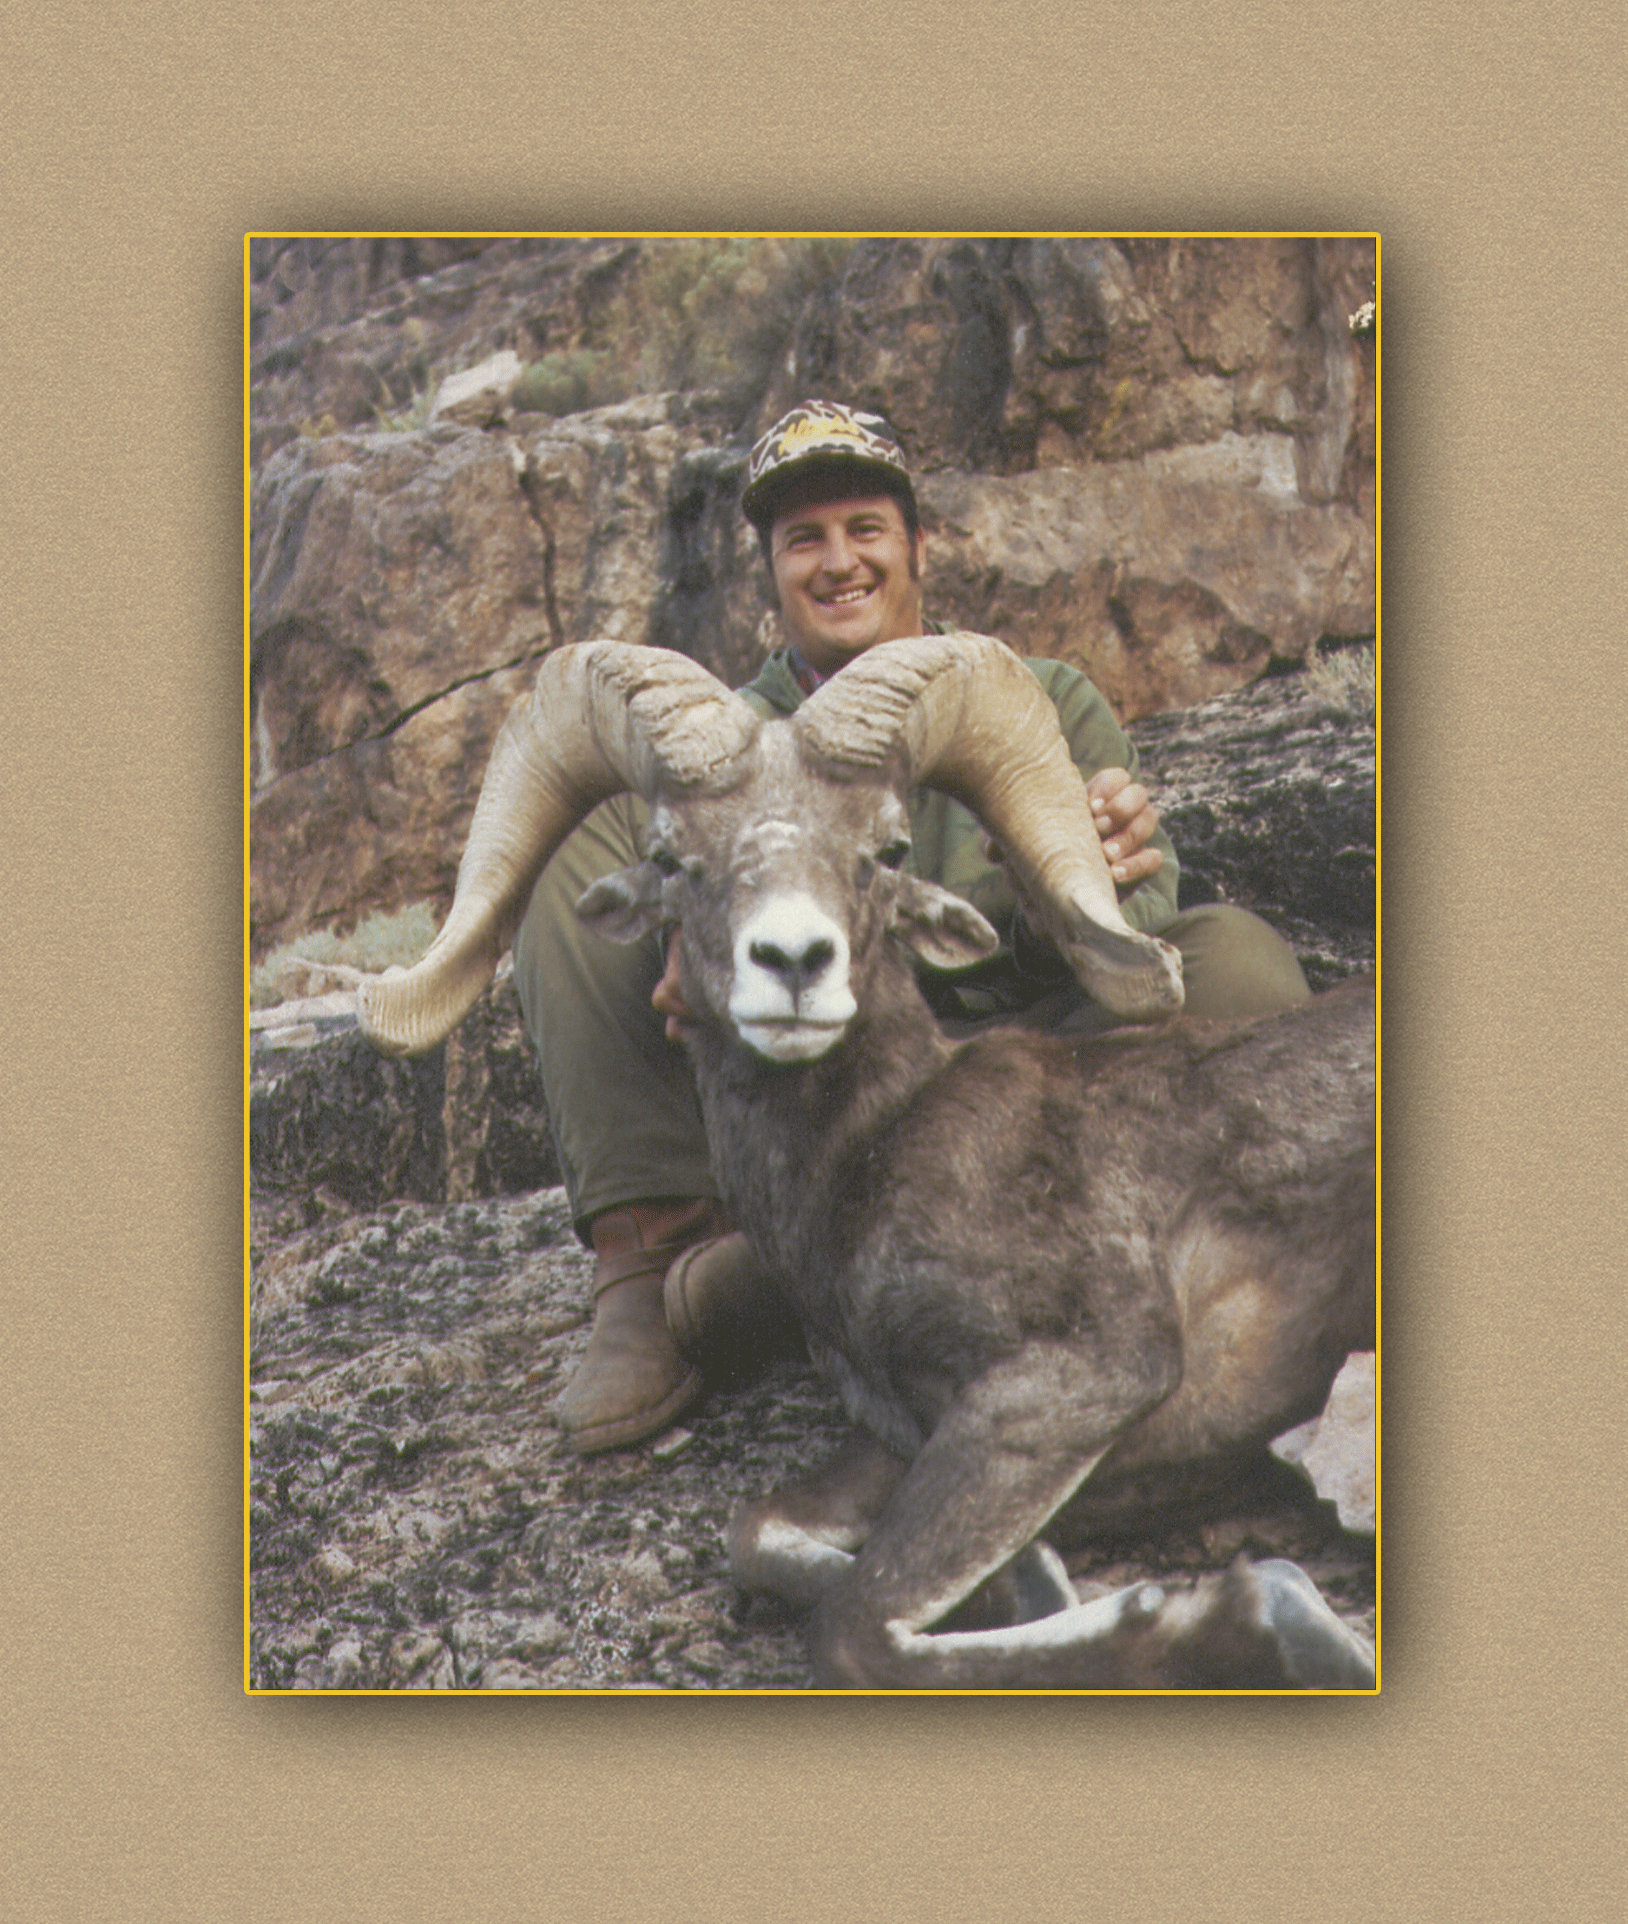 yellowhorn outfitters arizona hunting yellowhorn arizona bighorn sheep guiding outfitting deer elk antelope photography